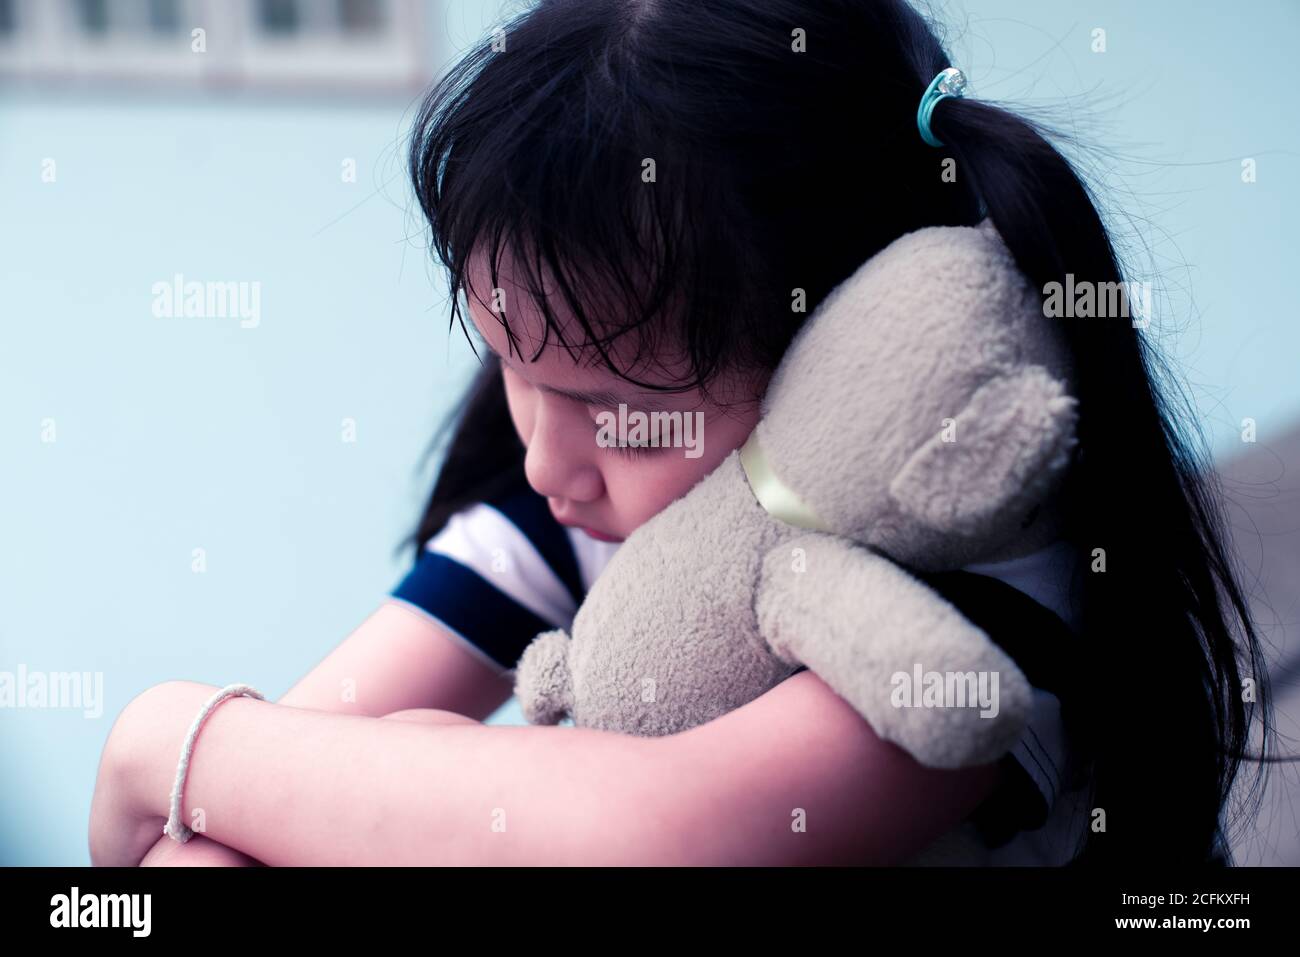 Asian sad child girl hugging teddy bear with love Stock Photo